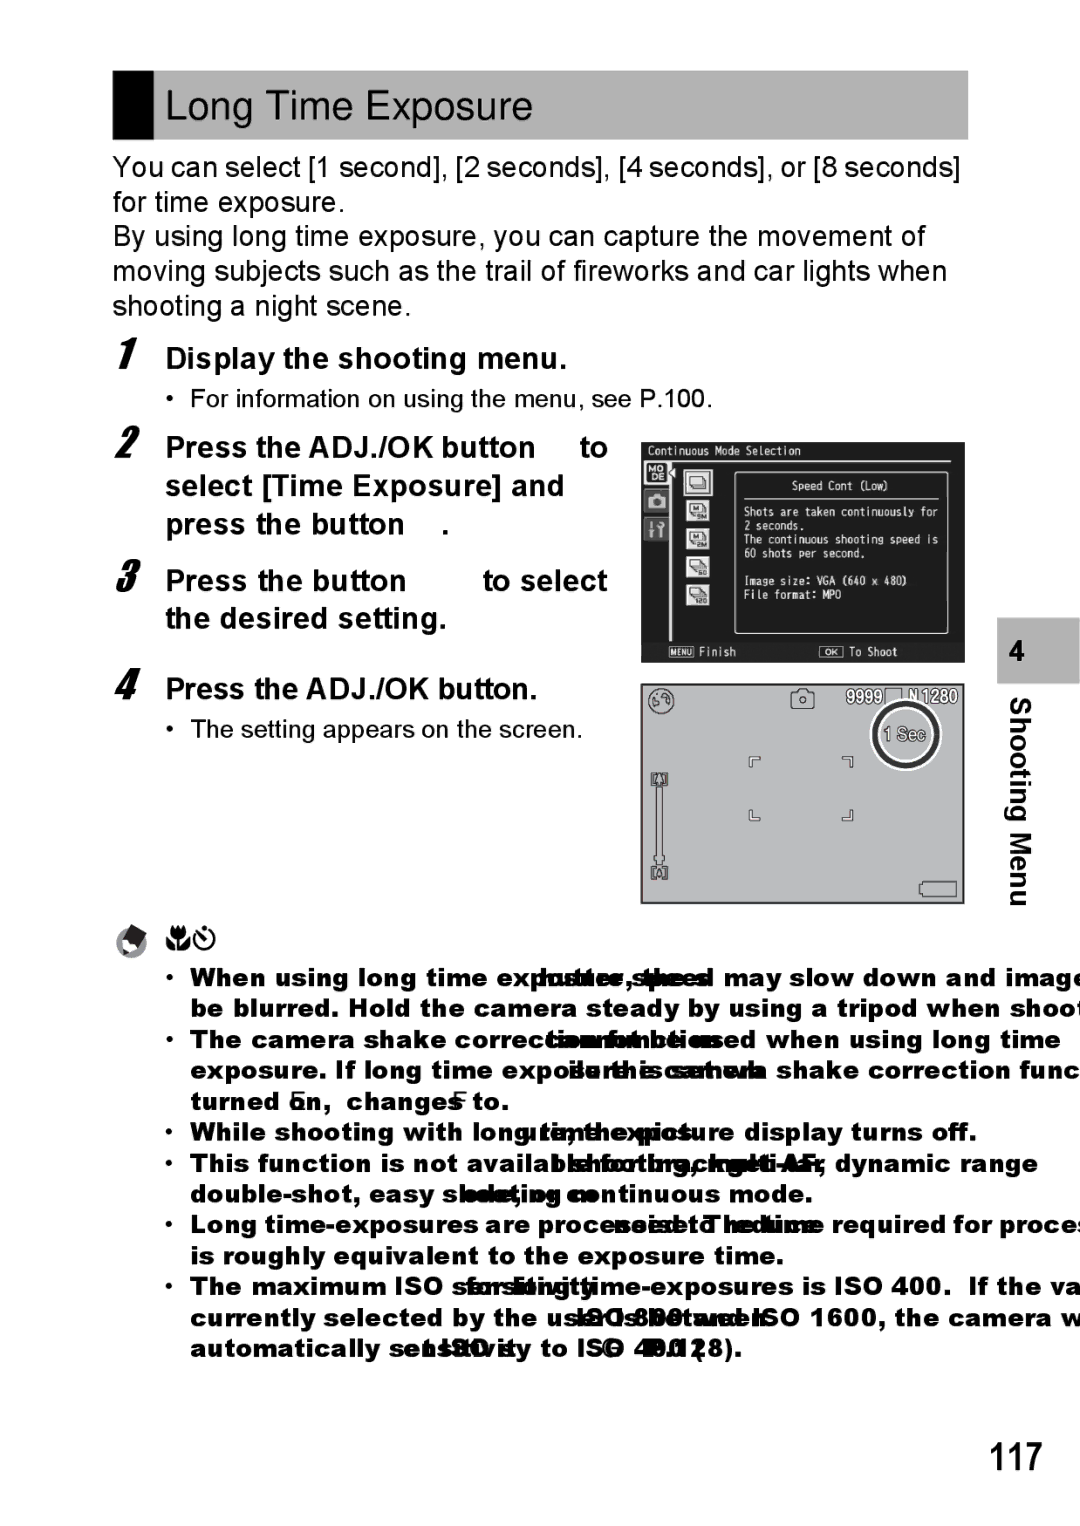 Samsung CX2 manual Long Time Exposure, 117 